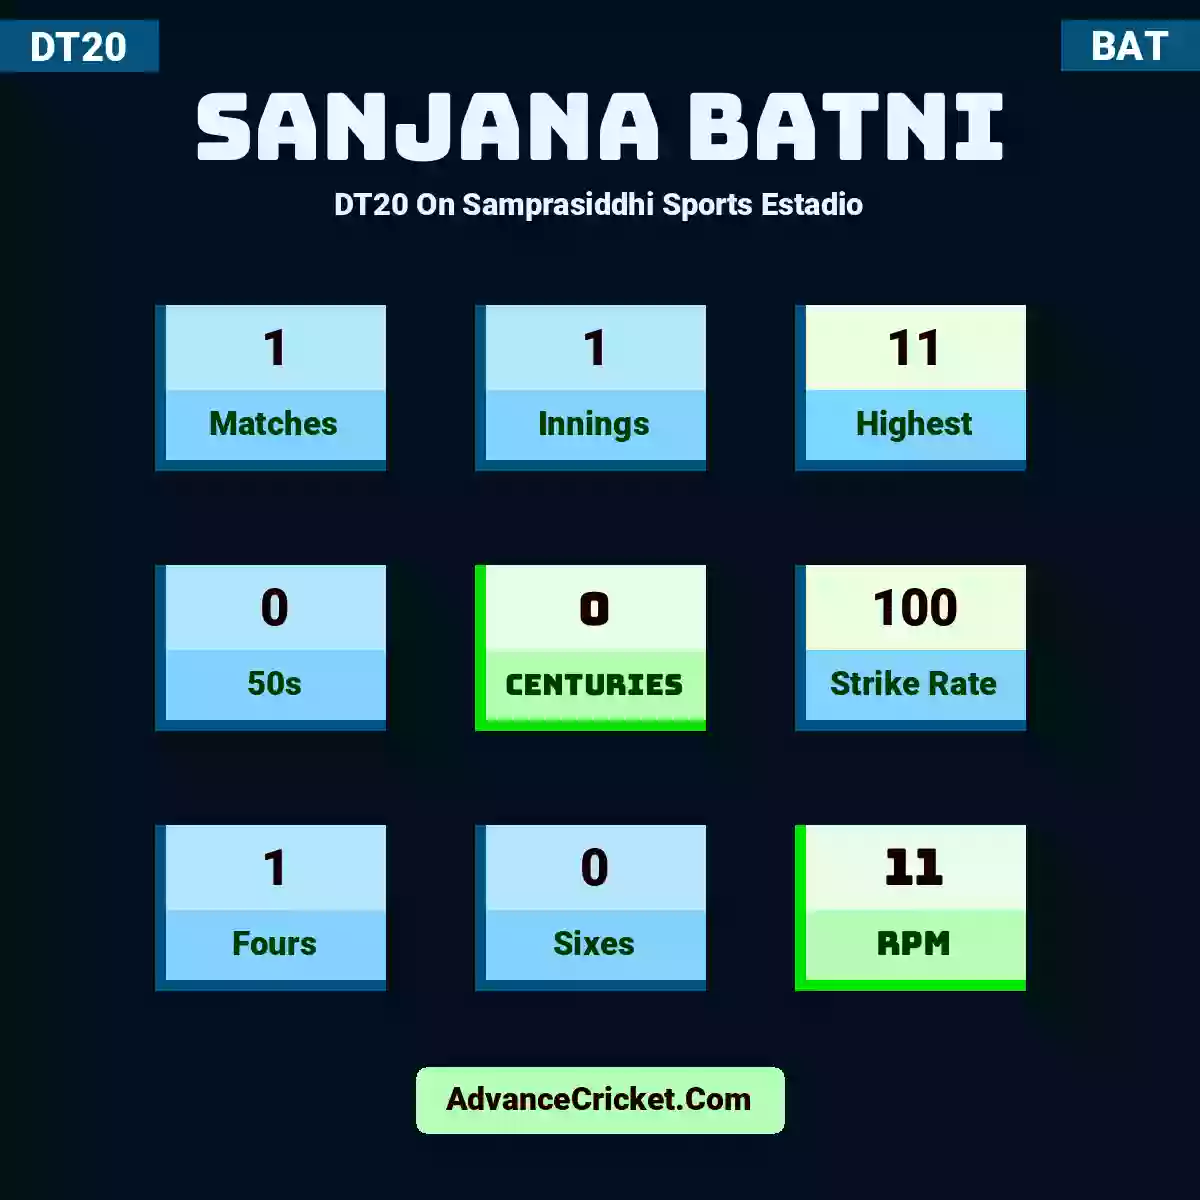 Sanjana Batni DT20  On Samprasiddhi Sports Estadio, Sanjana Batni played 1 matches, scored 11 runs as highest, 0 half-centuries, and 0 centuries, with a strike rate of 100. S.Batni hit 1 fours and 0 sixes, with an RPM of 11.